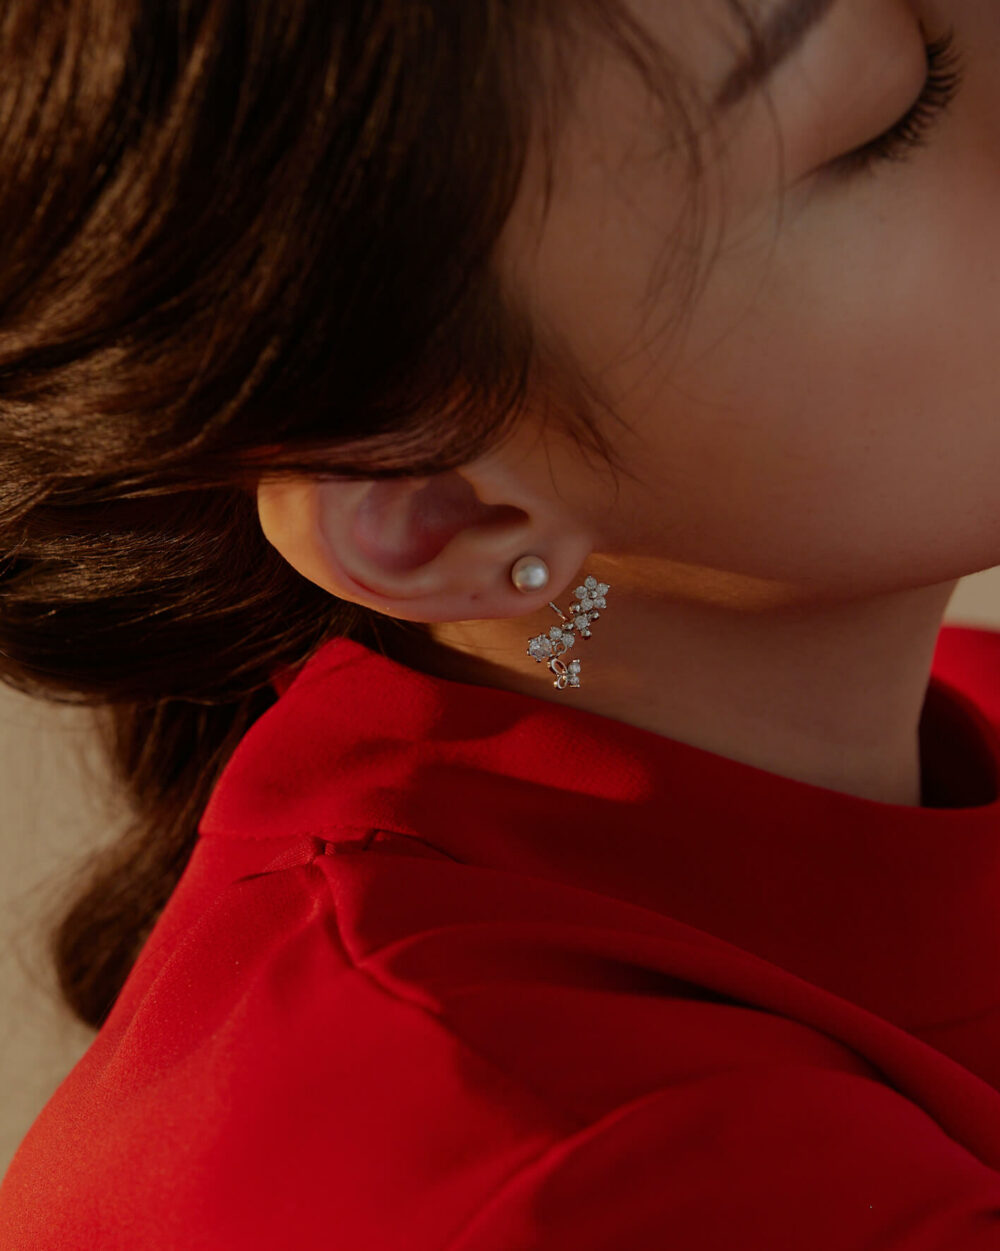 Eco安珂,韓國飾品,韓國耳環,韓國耳骨夾,韓國耳扣,耳夾式耳環,磁鐵耳環,磁吸式耳環,無耳洞耳環